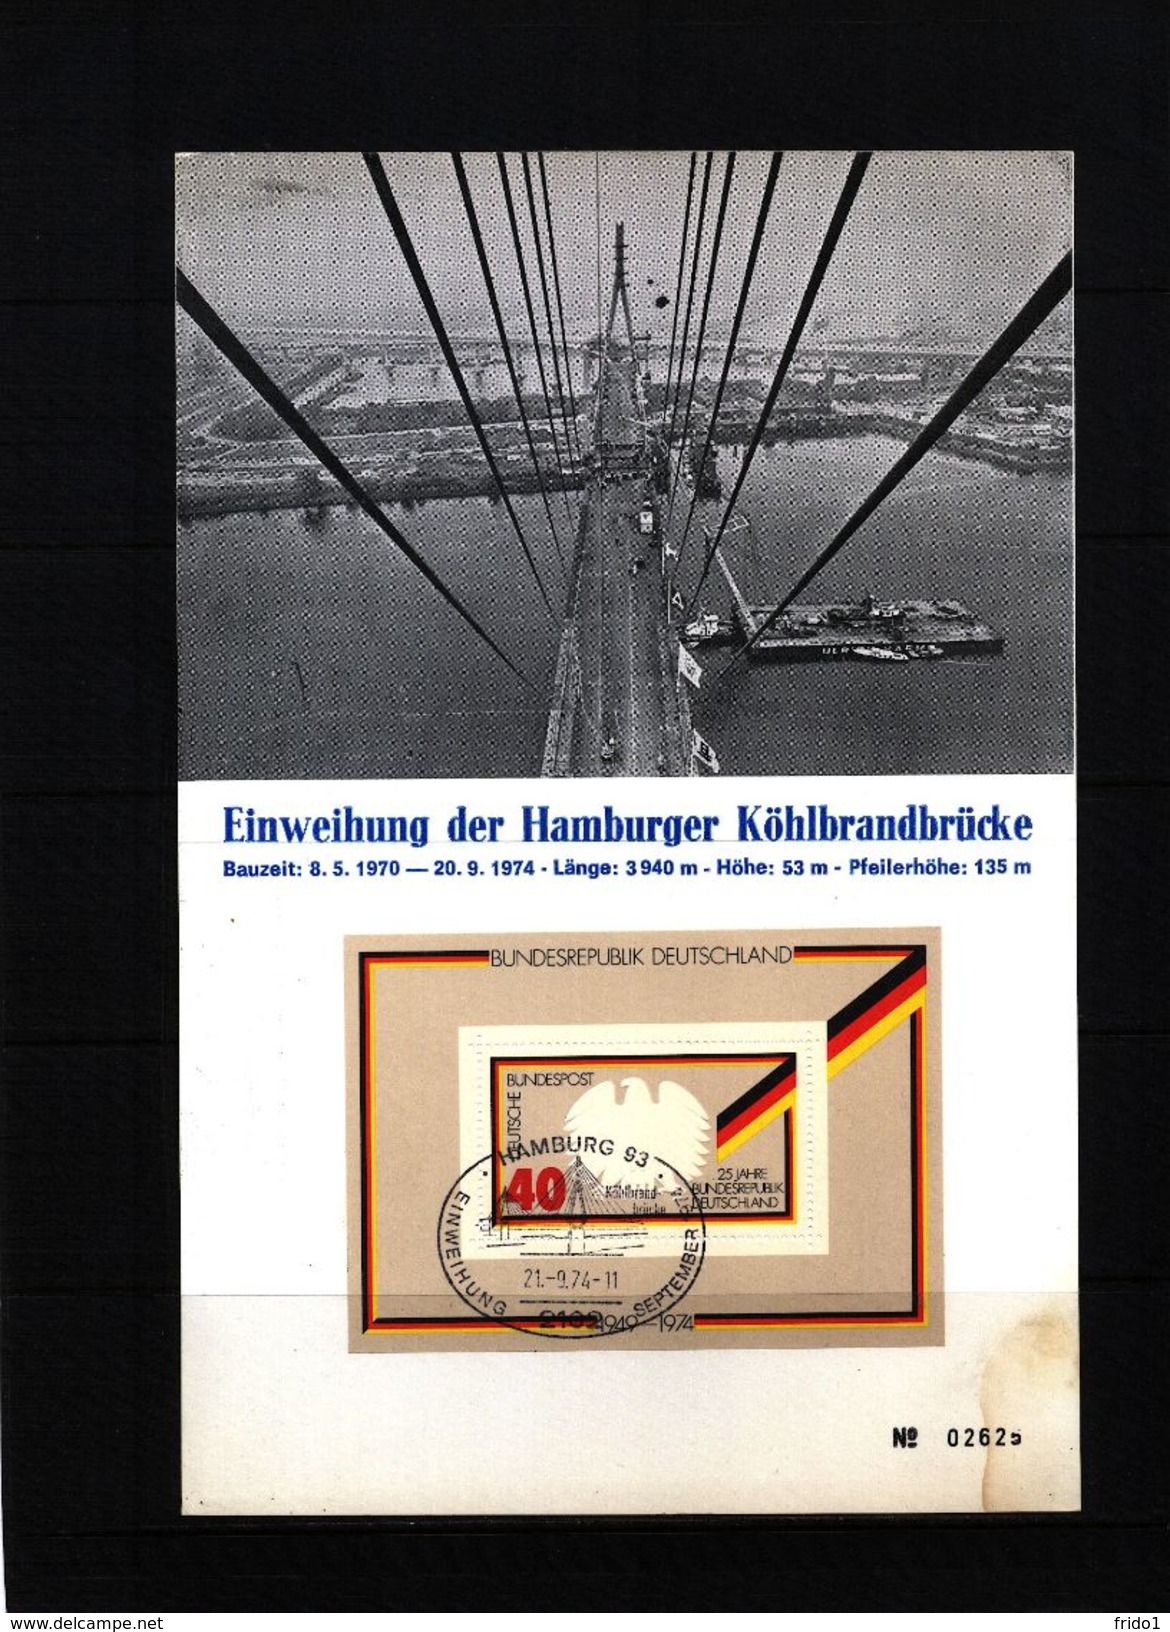 Deutschland / Germany 1974 Koehlbrandbruecke Interesting Postcard - Brücken